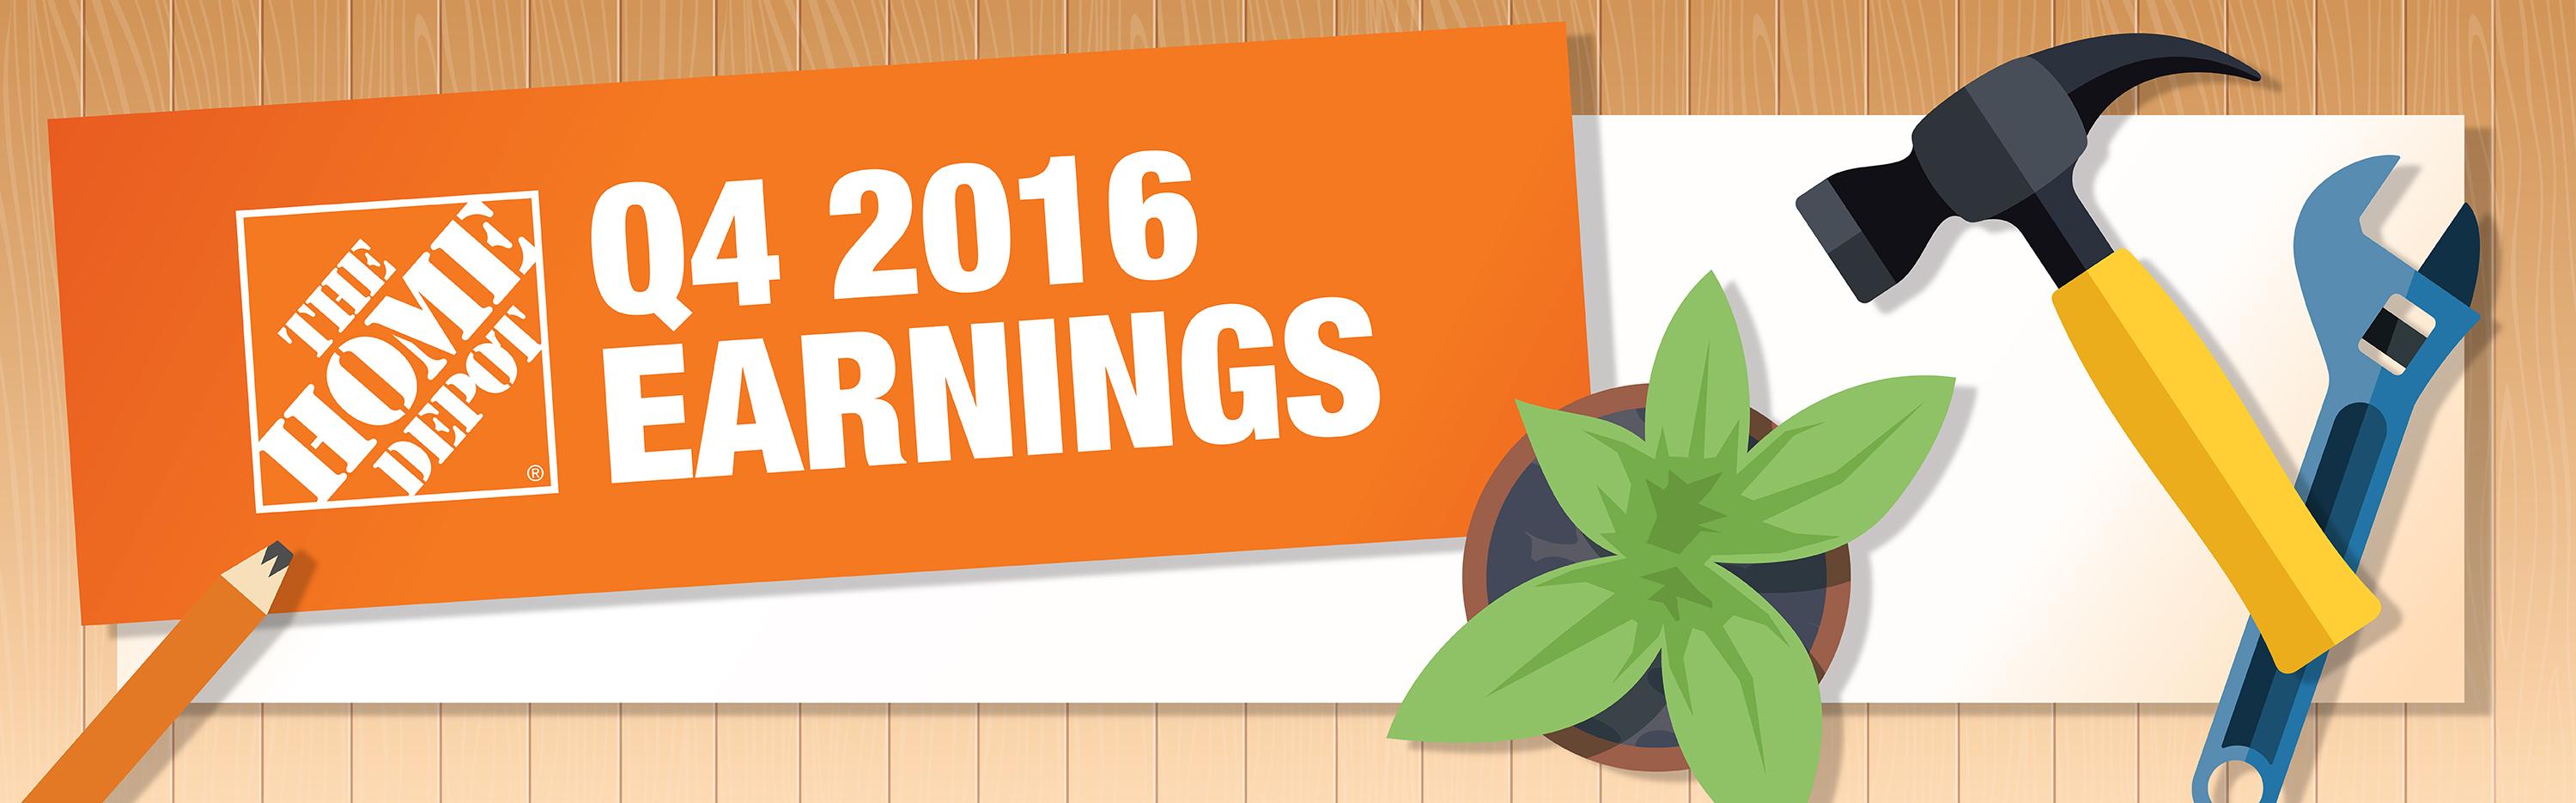 Fourth Quarter 2016 Earnings Announcement